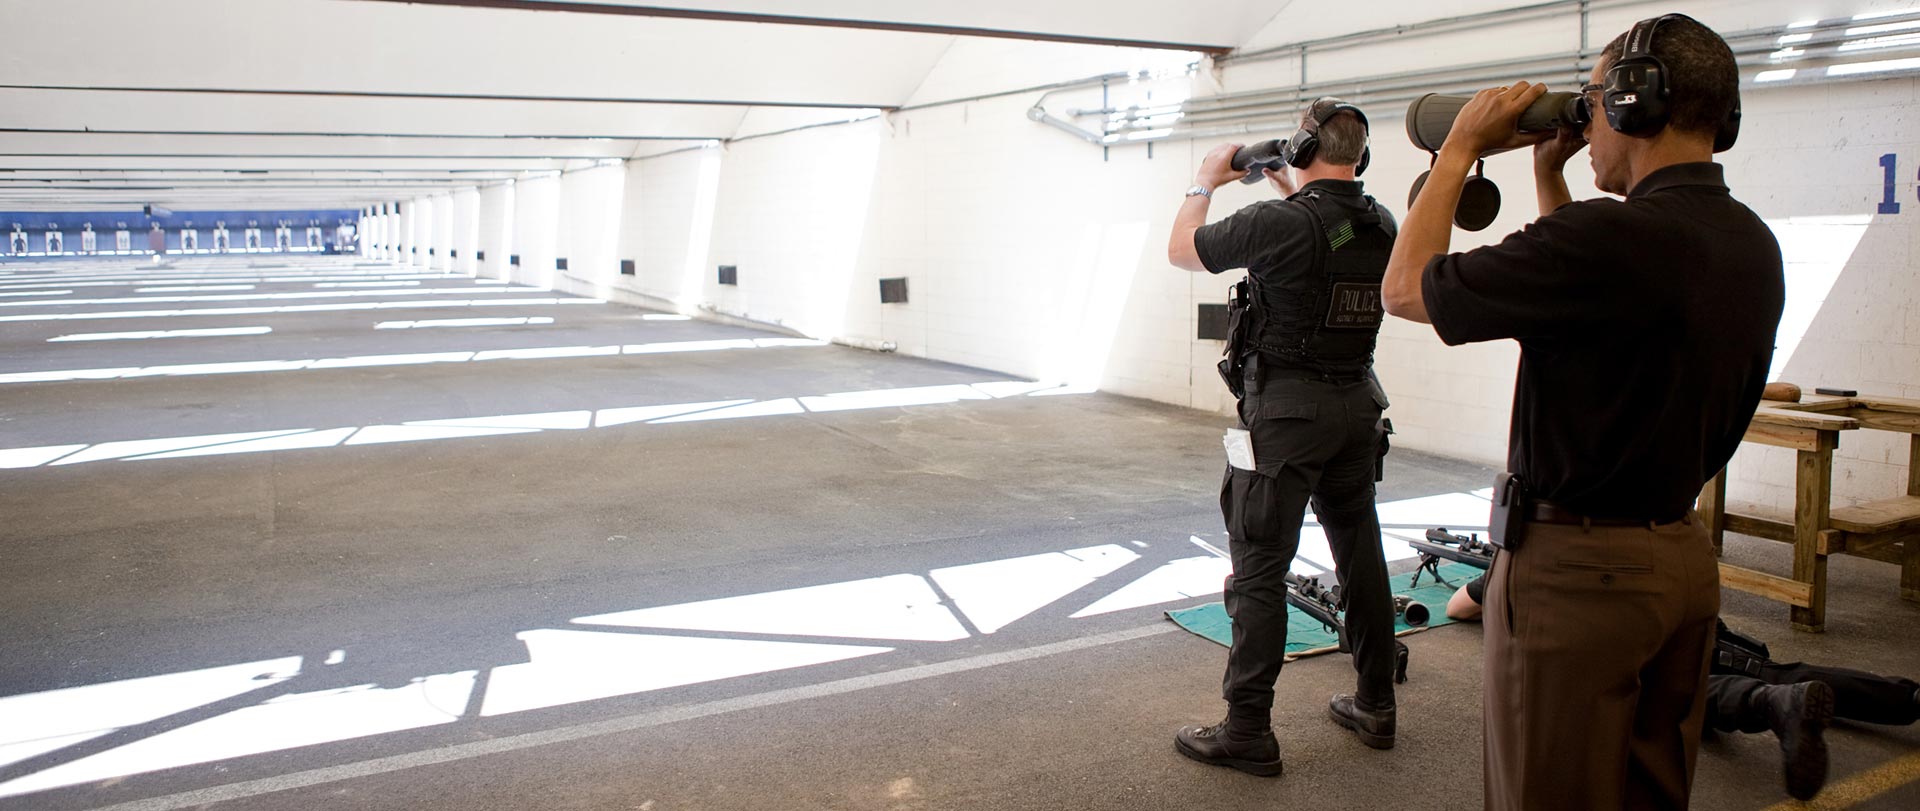 Secret Service Rowley Training Center firing range